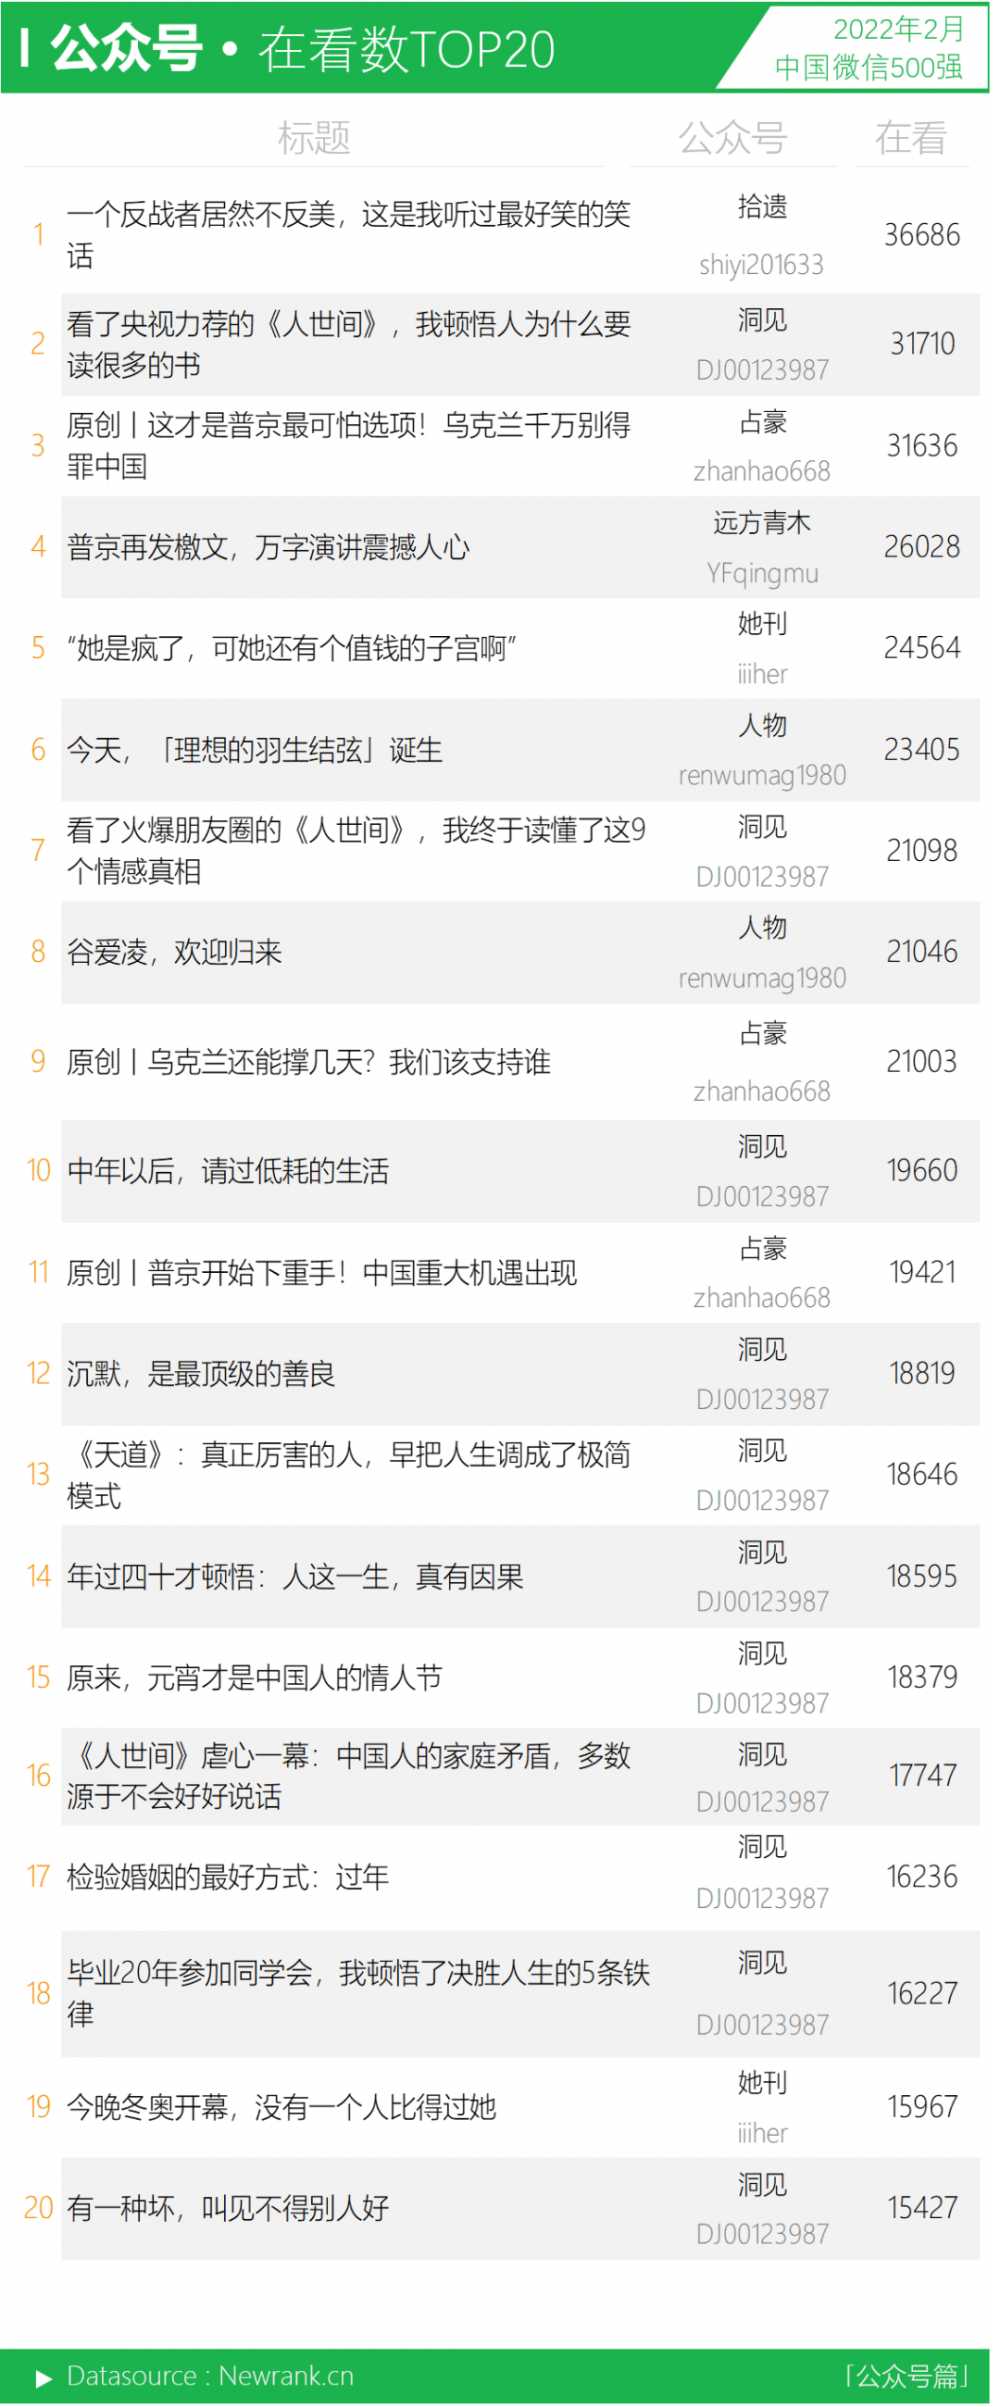 <a href='https://www.zhouxiaohui.cn
' target='_blank'><a href='https://www.zhouxiaohui.cn/duanshipin/
' target='_blank'>视频号</a></a>TOP10大换员，头部竞争激烈； | 中国微信500强月报（2022.02）-第15张图片-周小辉博客